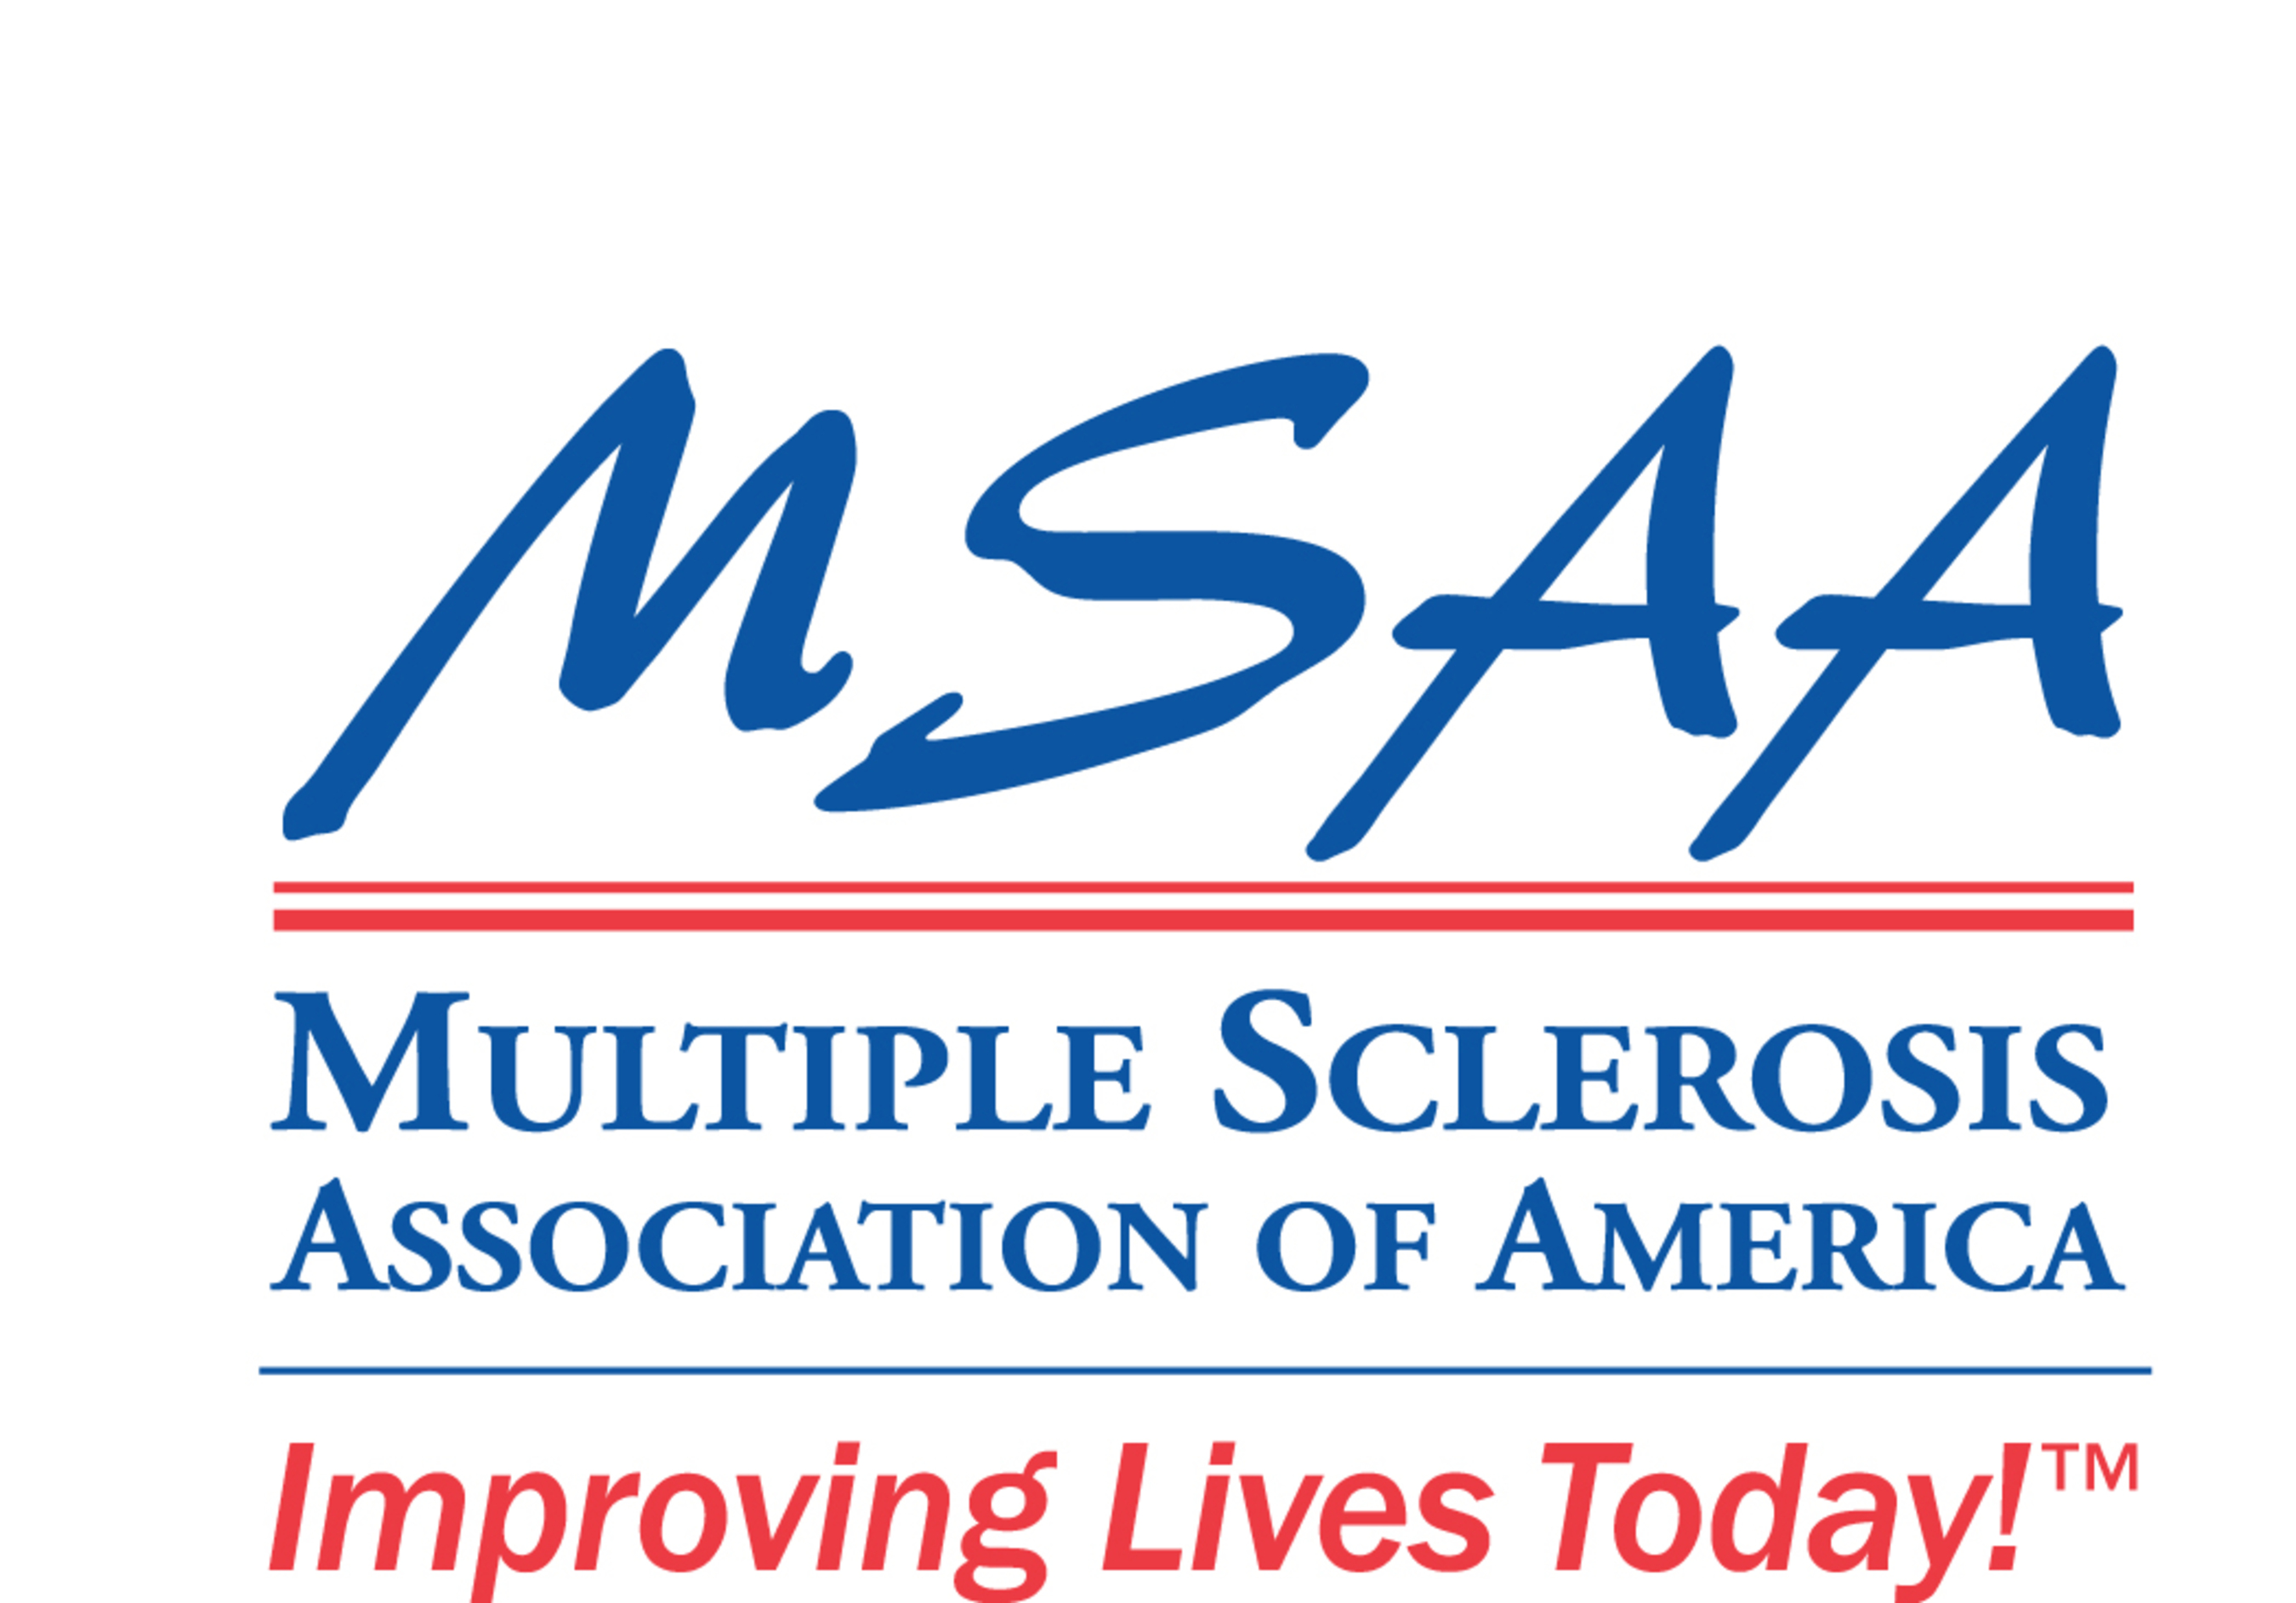 Multiple Sclerosis Association of America logo.